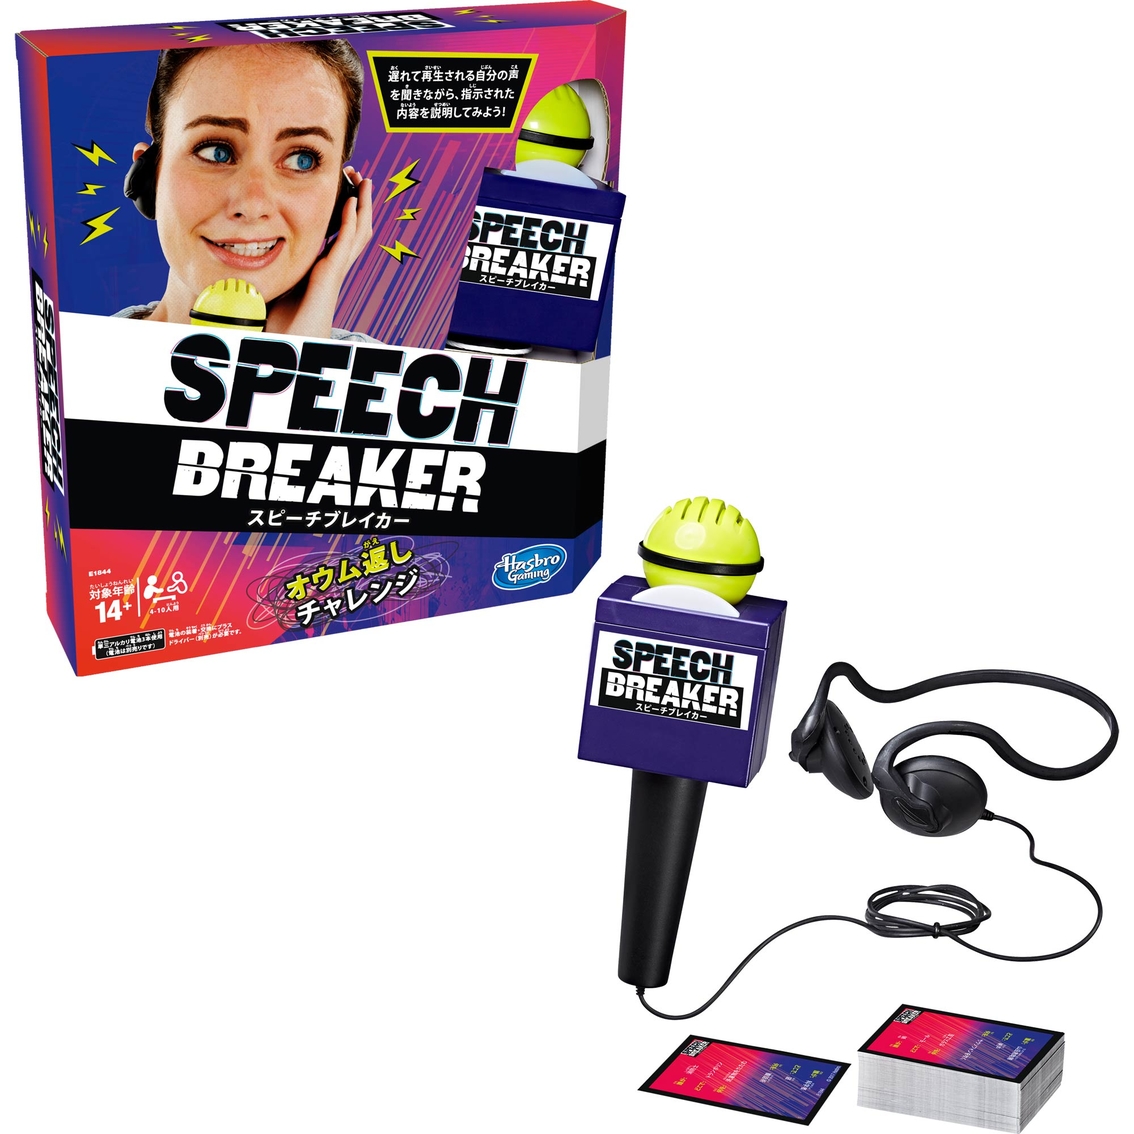 Hasbro Speech Breaker Game - Image 2 of 3